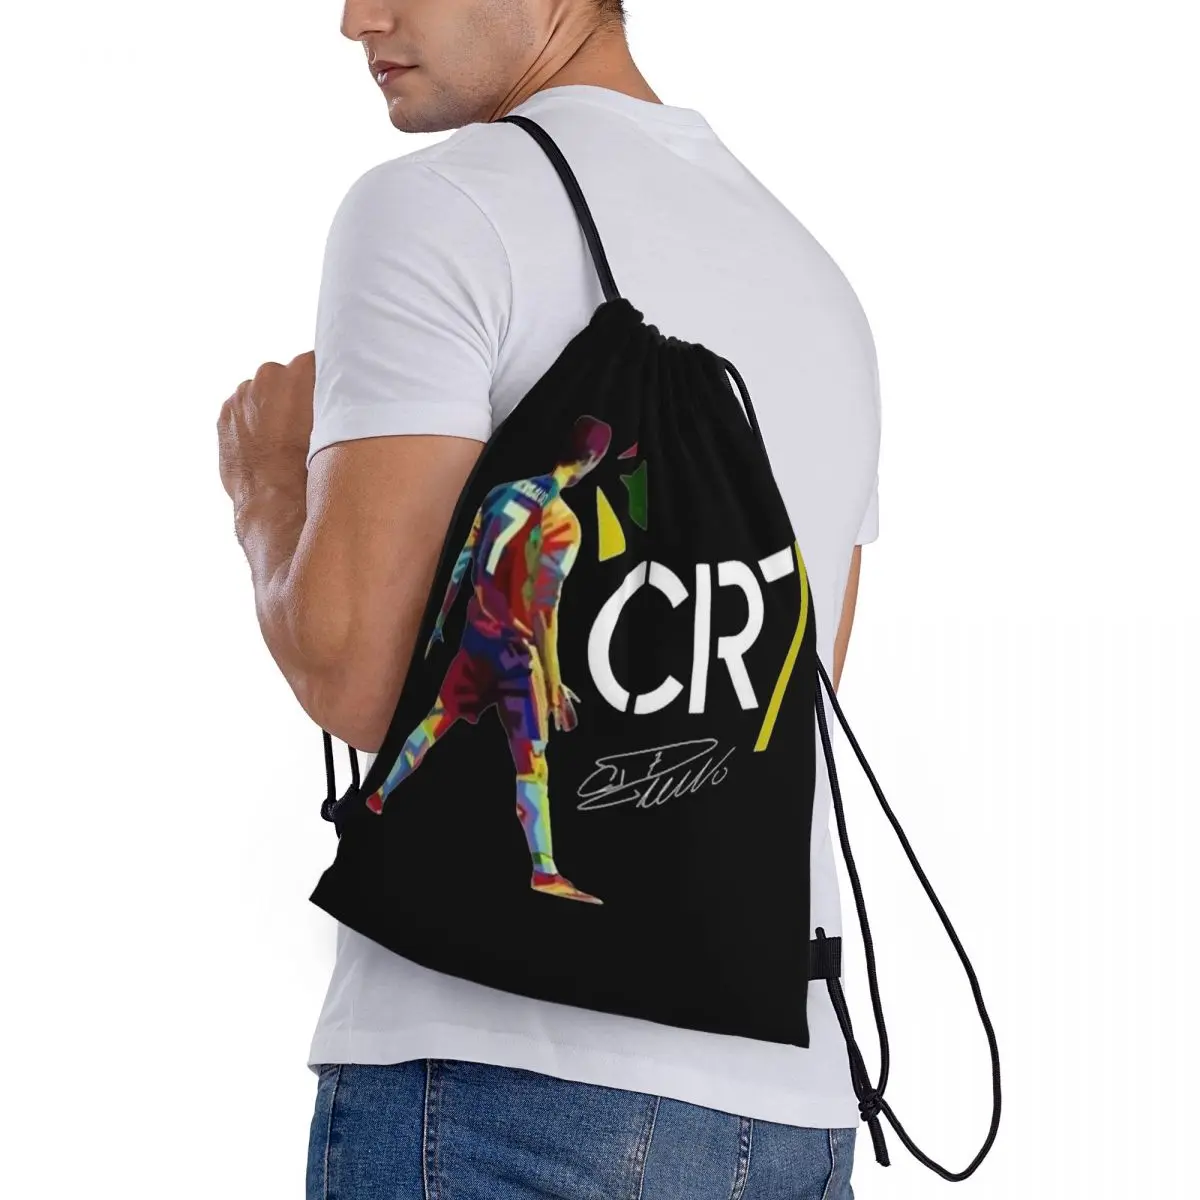 Cr7 Cristiano Ronaldo Signature Drawstring Bags Sports Backpack Gym Sackpack Football String Bag for Cycling